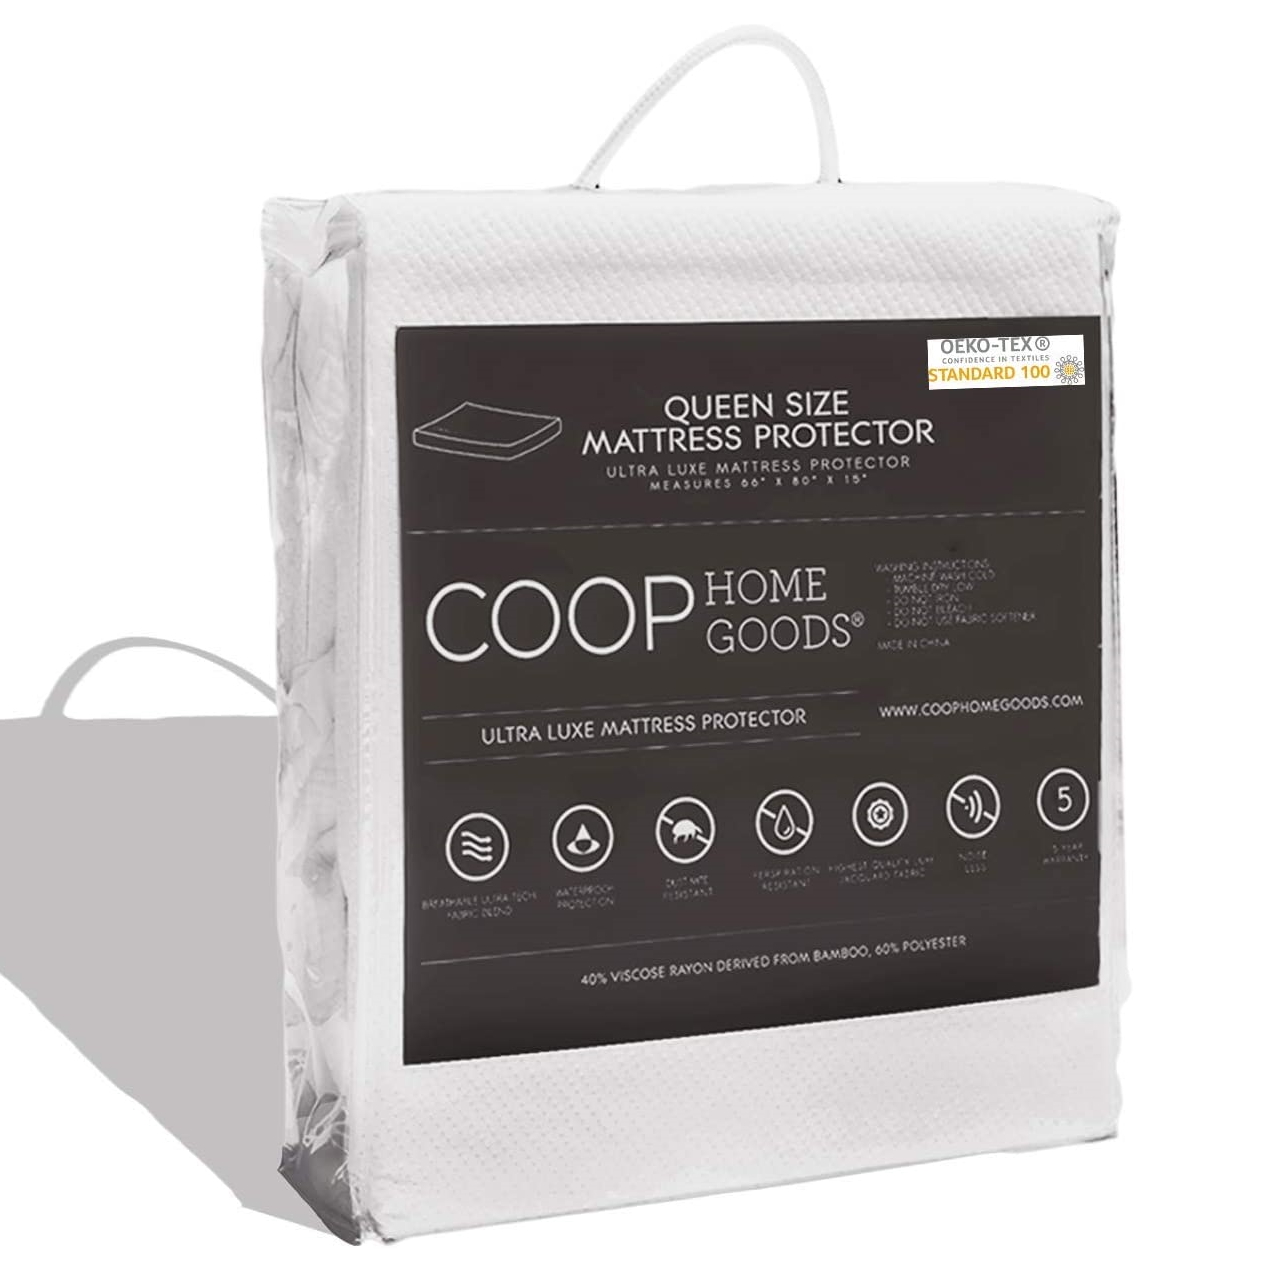 Lulltra Waterproof Mattress Protector by Coop Home Good